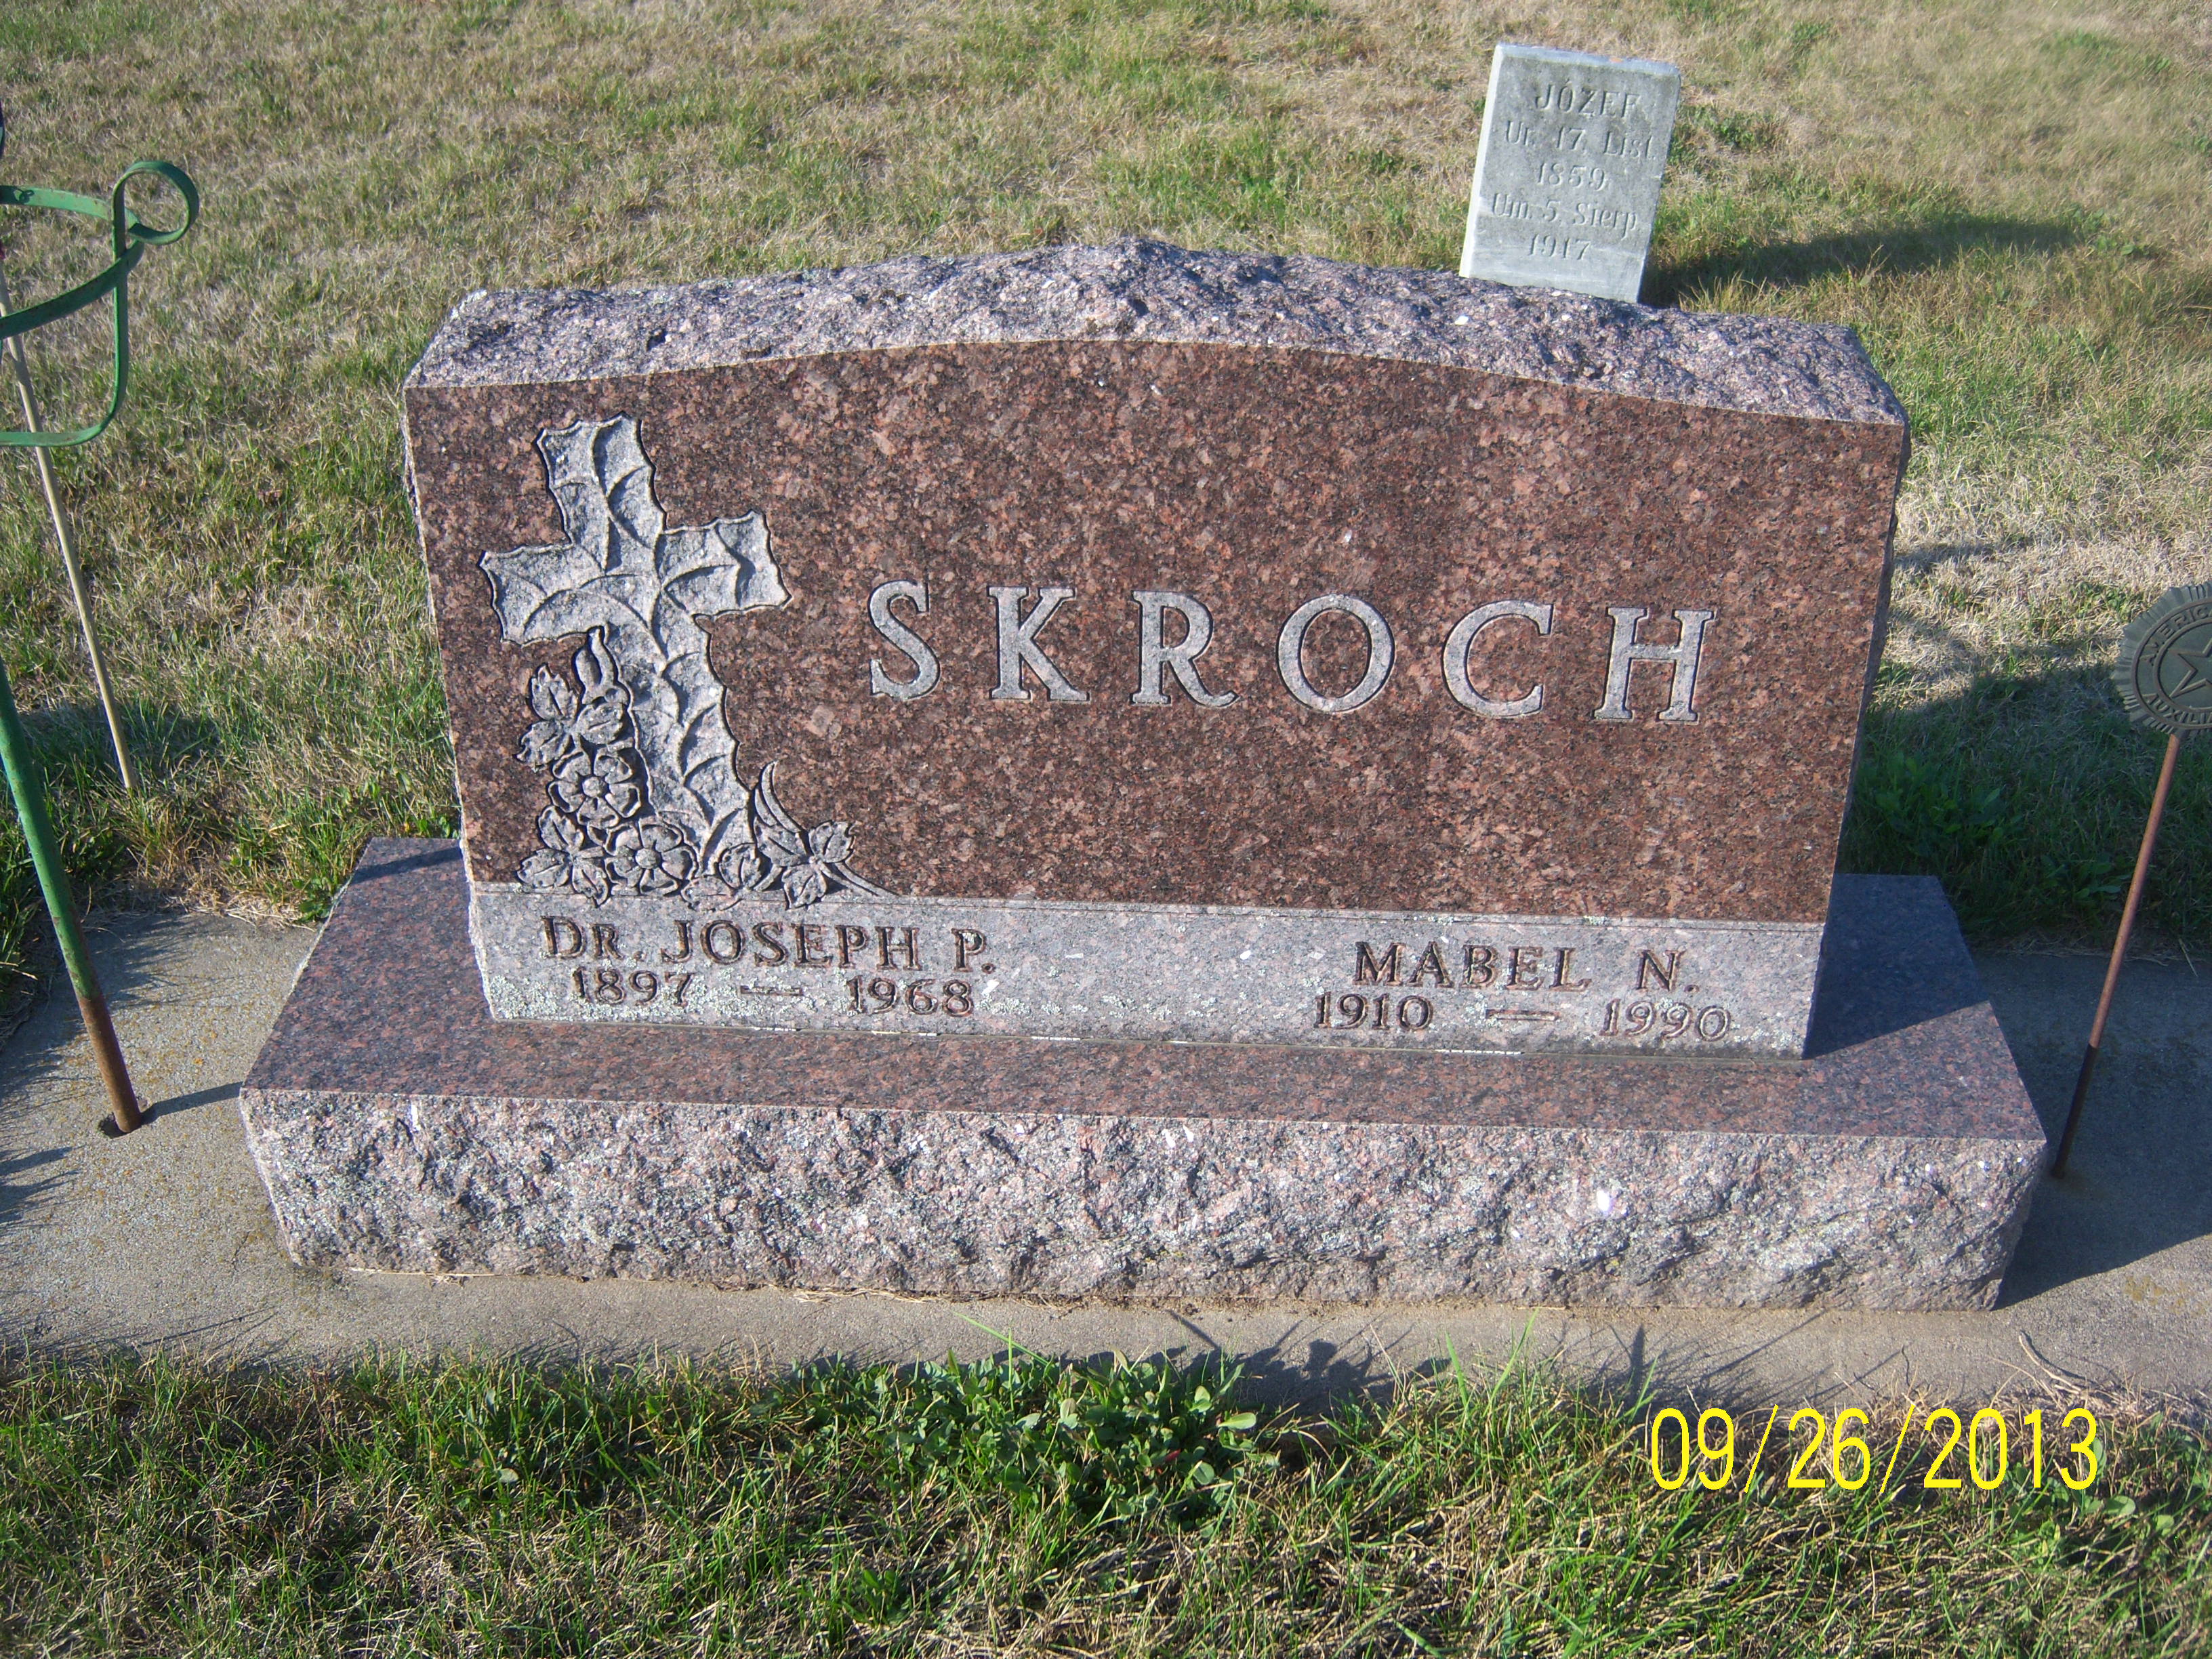 Joseph P. Skroch grave stone